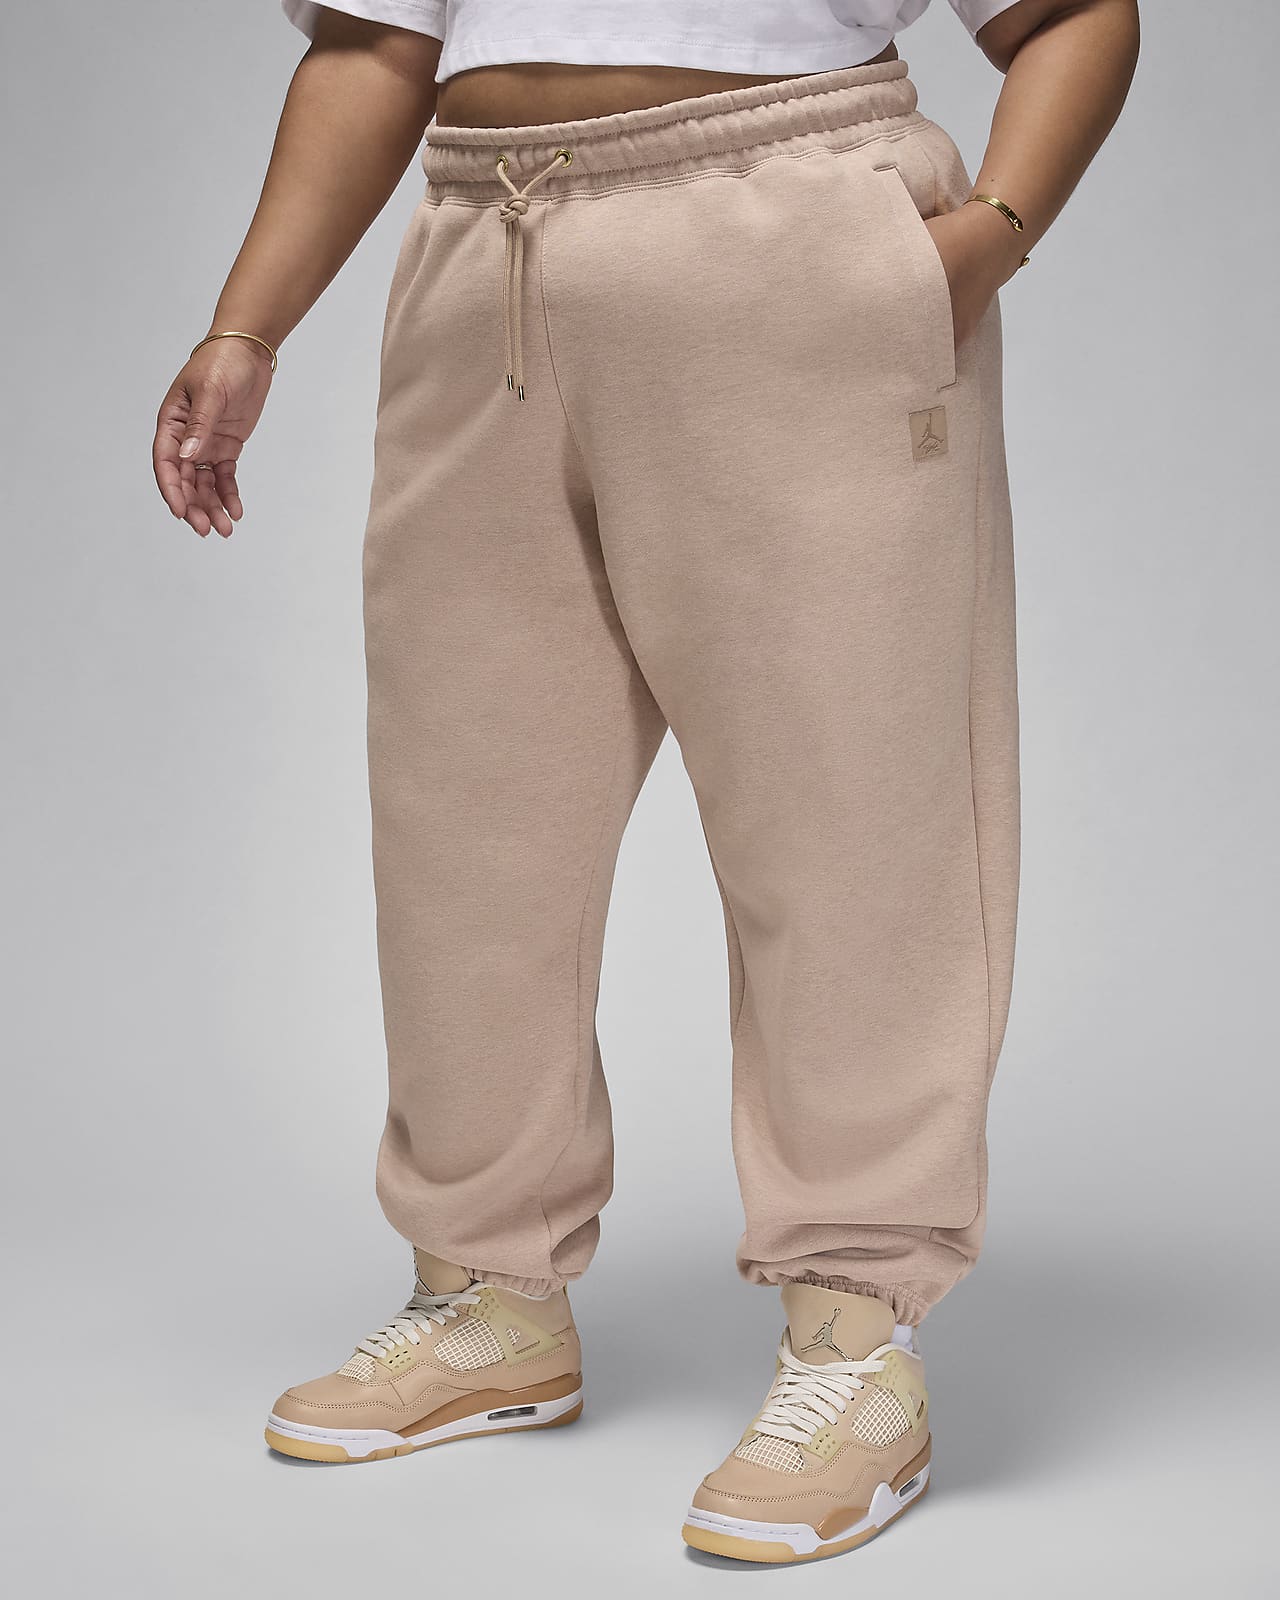 Pantalones de tejido Fleece para mujer Jordan Flight (talla grande)